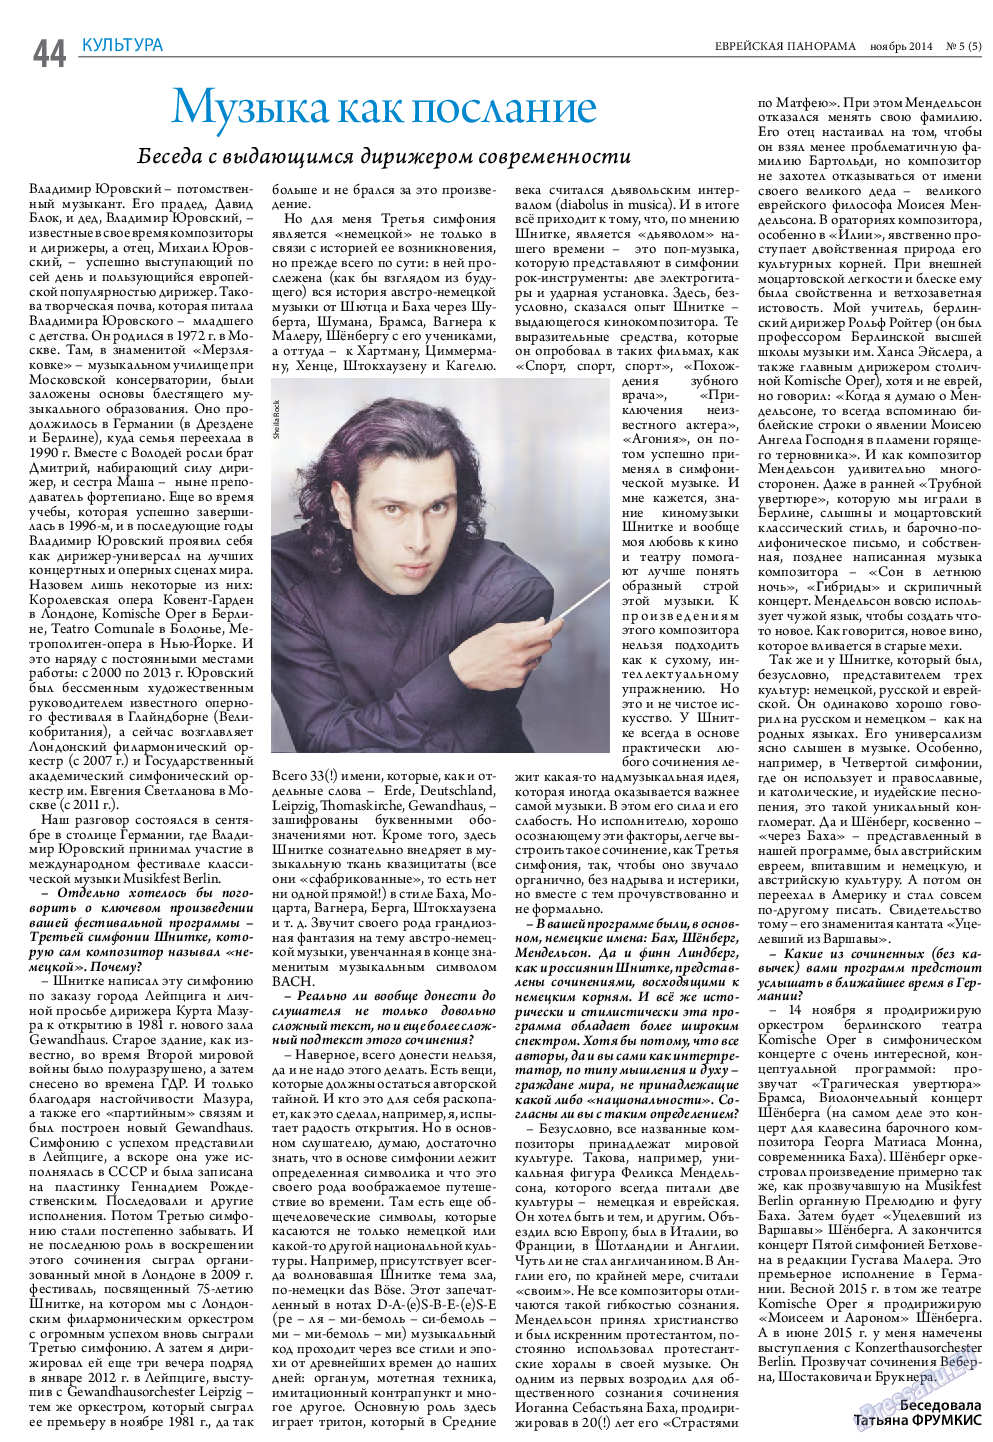 Еврейская панорама, газета. 2014 №5 стр.44